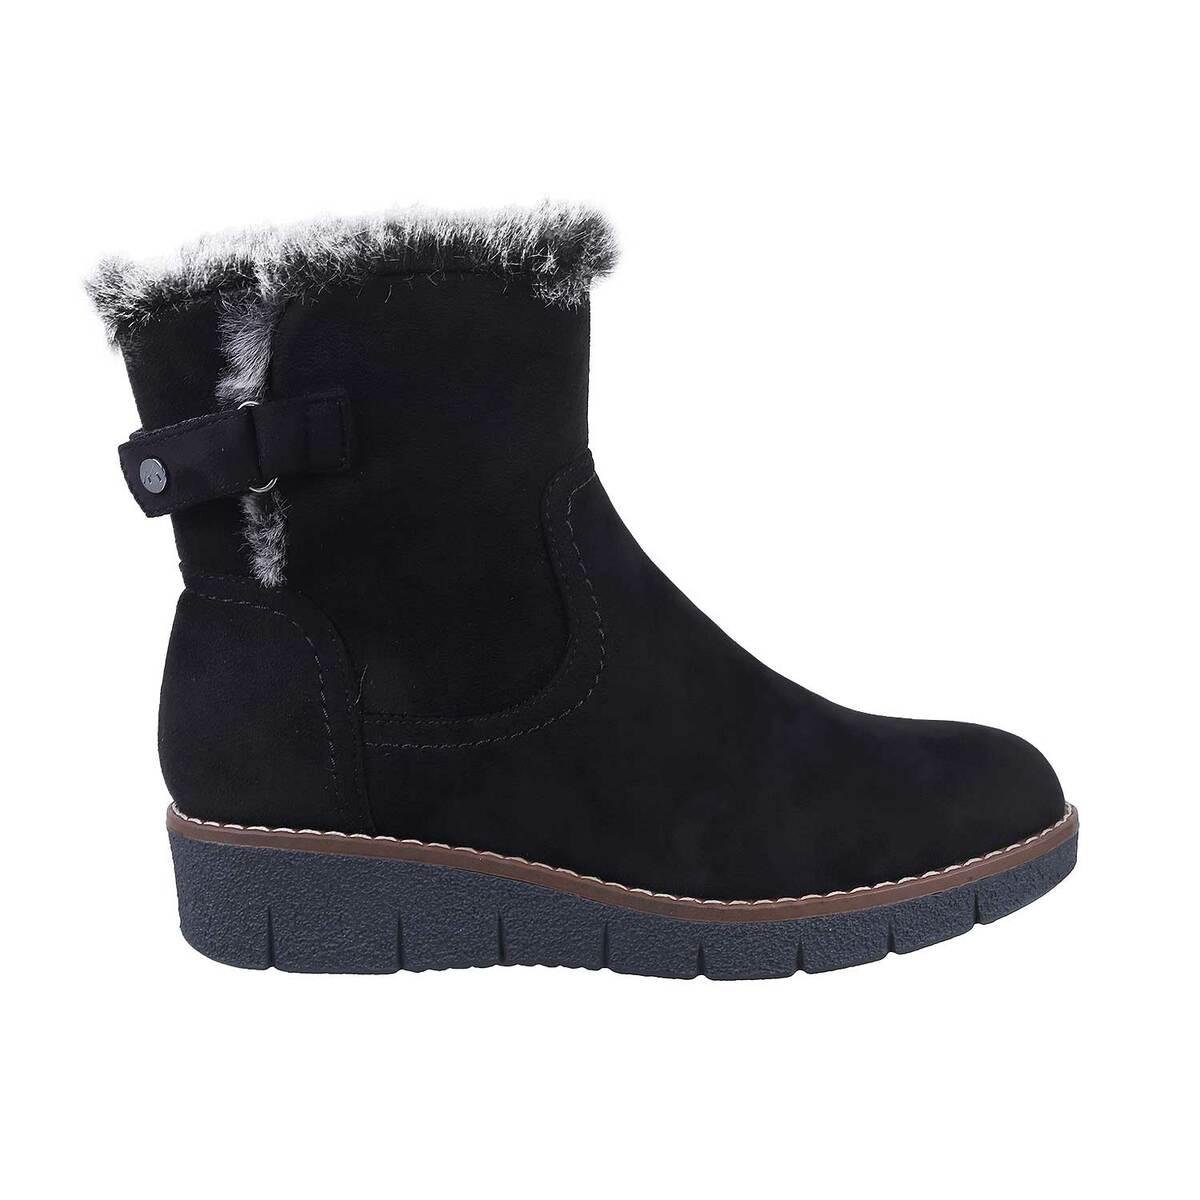 Buy Women Black Party Boots Online | SKU: 31-9476-11-36-Metro Shoes